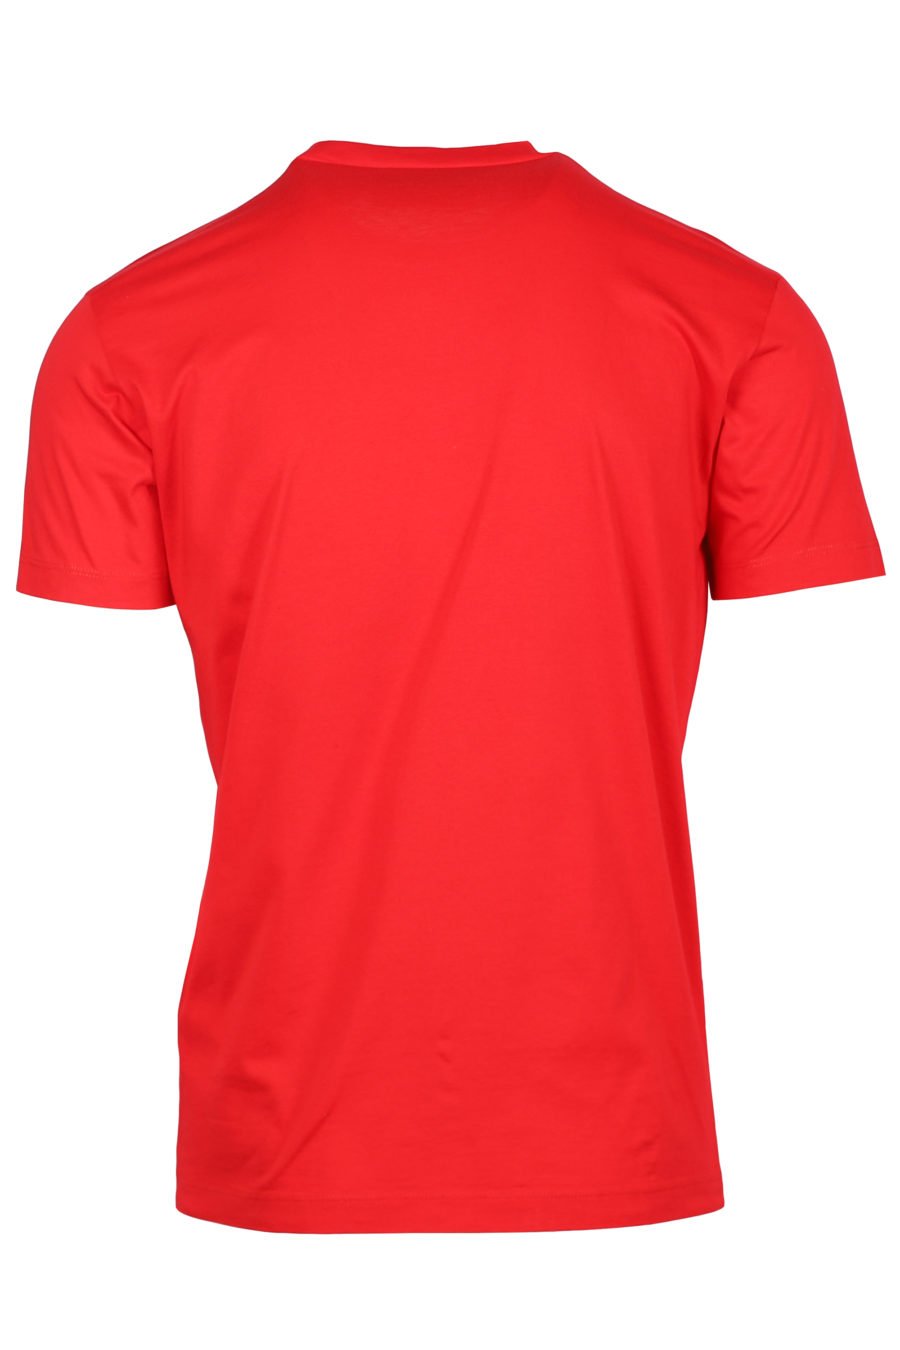 Camiseta roja con logo "Icon Spray" - IMG 2341